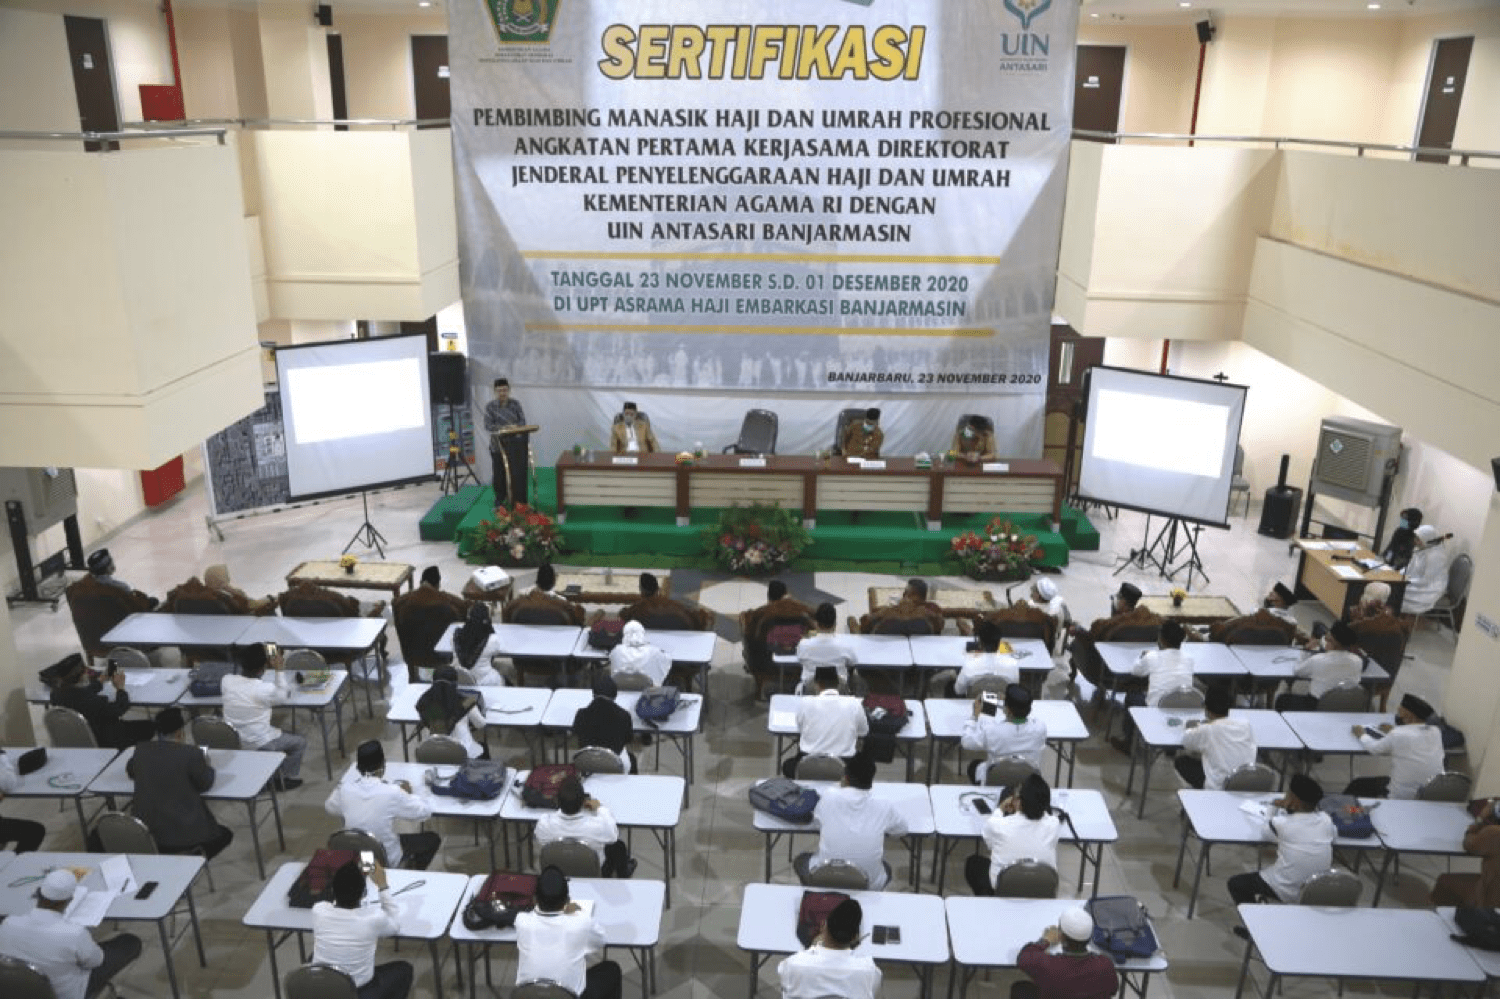 Fakultas Dakwah dan Ilmu Komunikasi Bersama Dirjen Penyenggara Haji dan Umrah Kemeneg RI Gelar Sertifikasi Pembimbing Manasik Haji dan Umroh